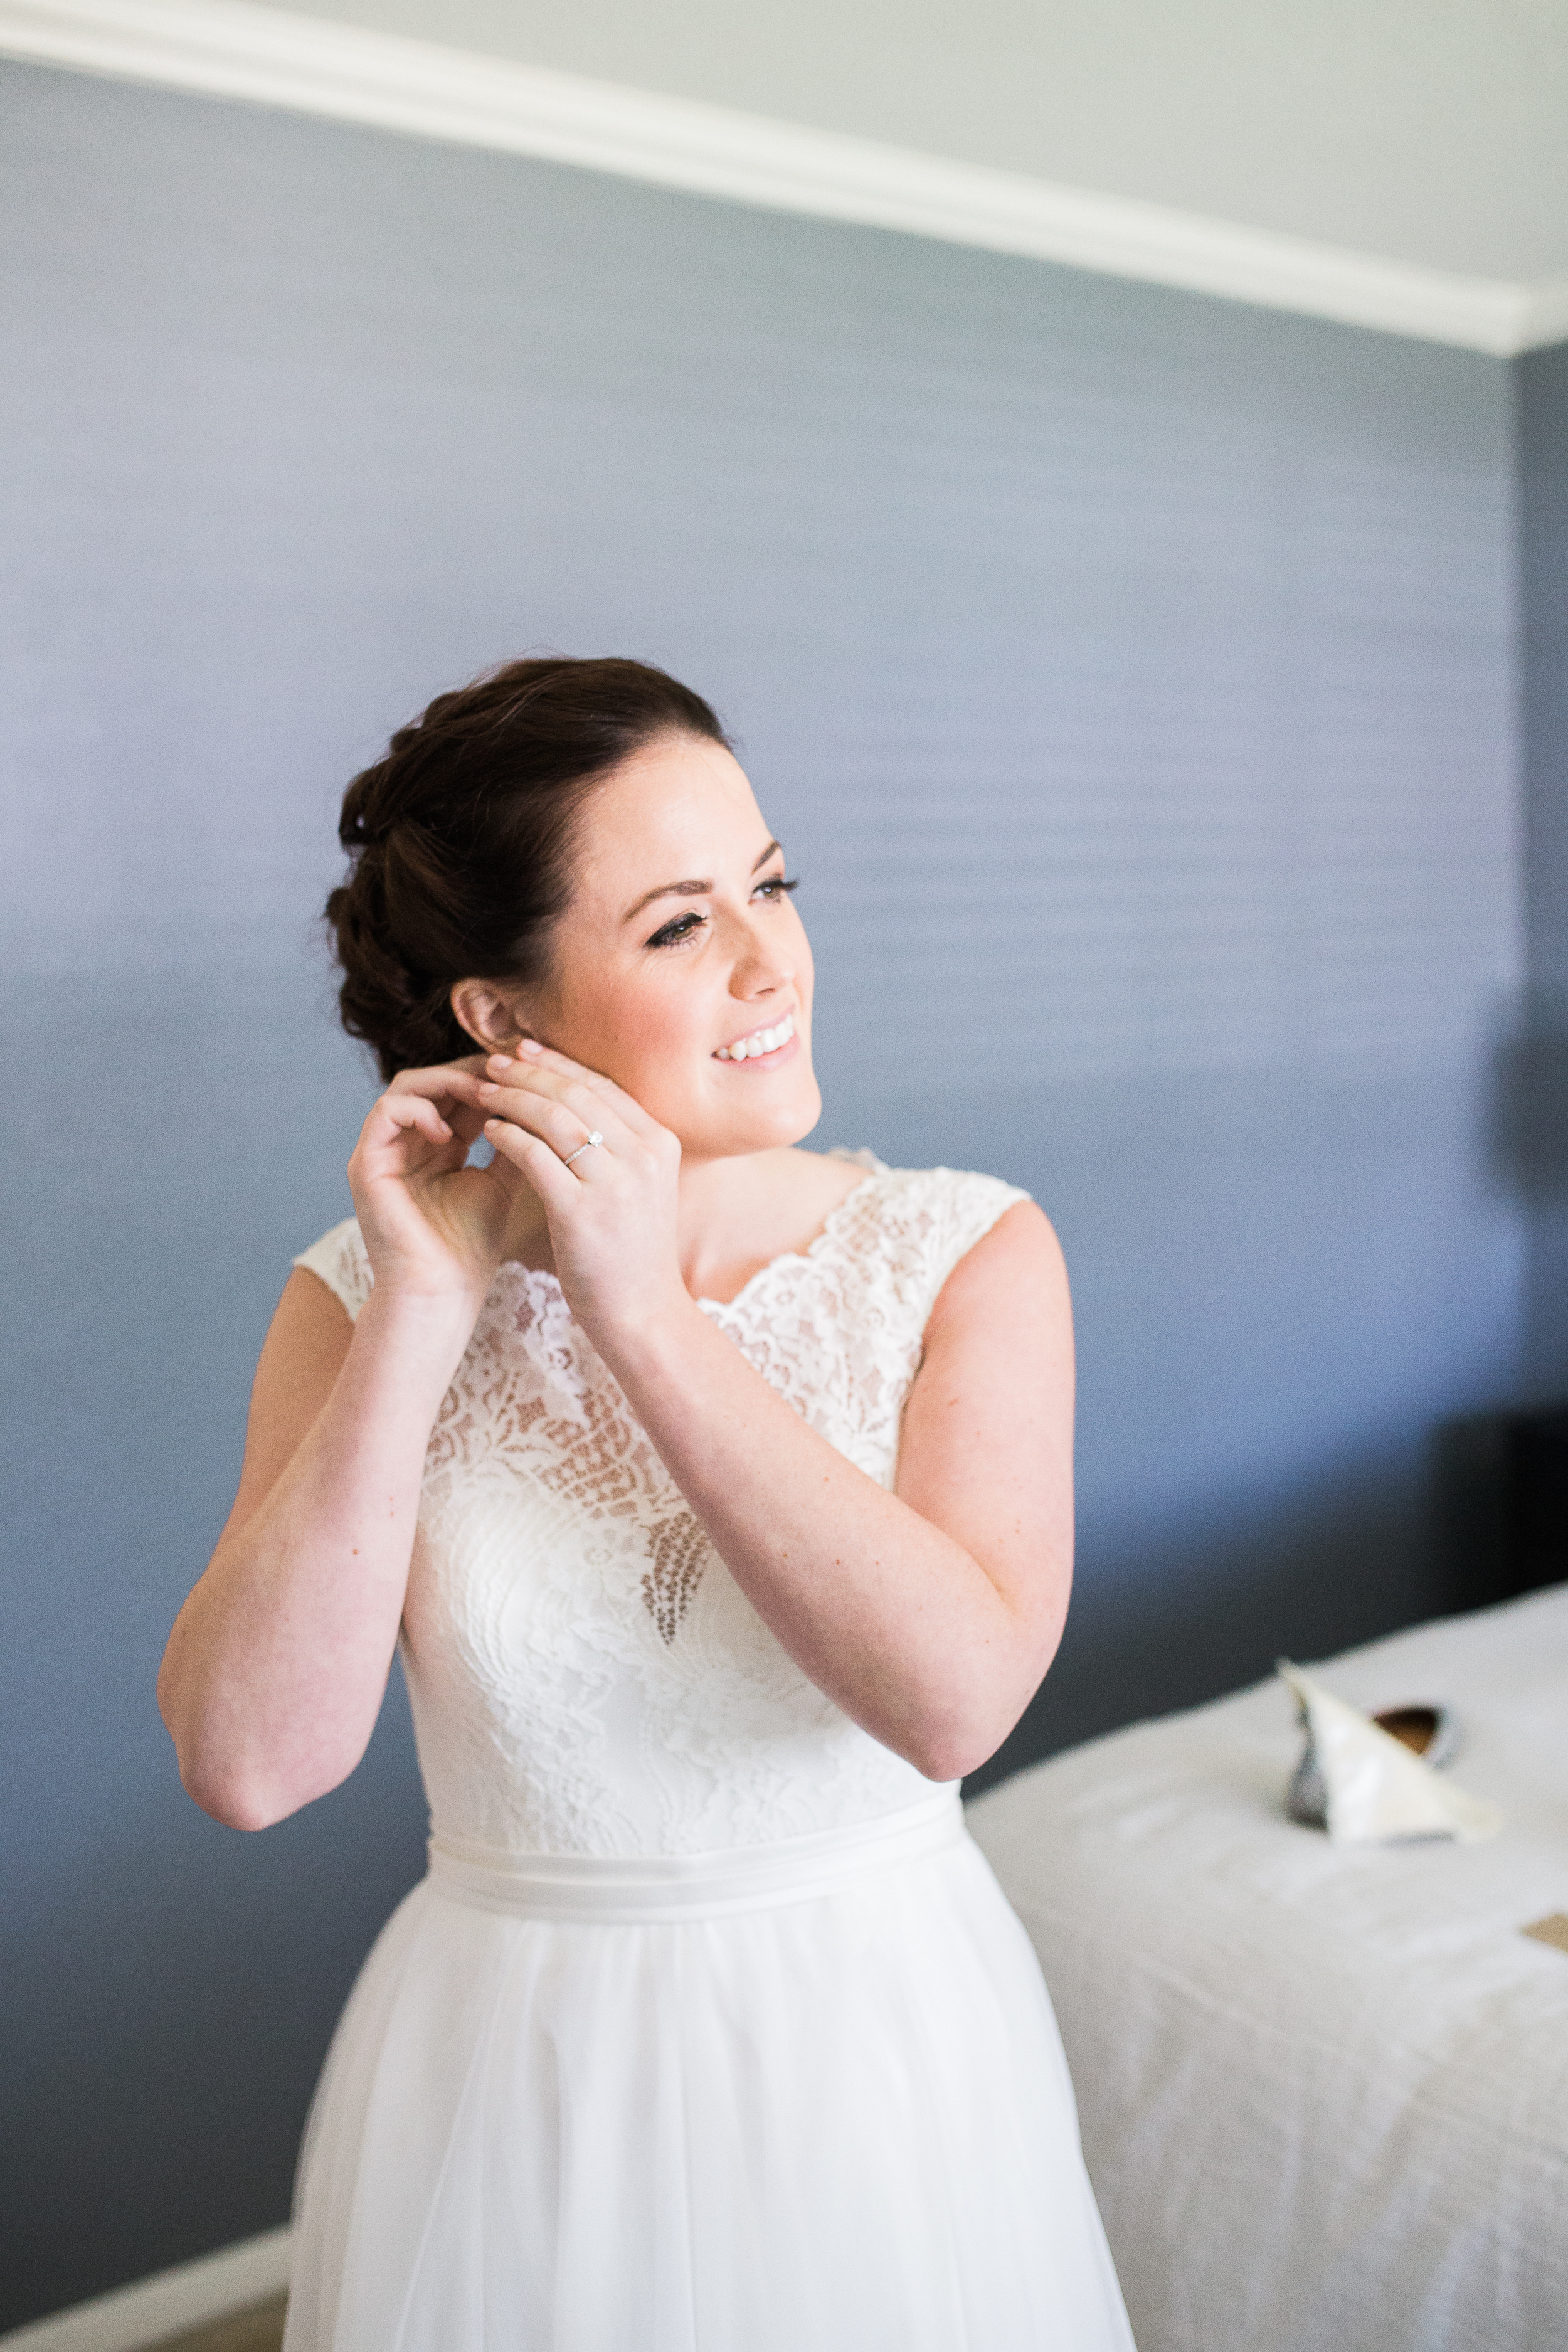 Coohills Wedding Photographer - bride putting on earrings